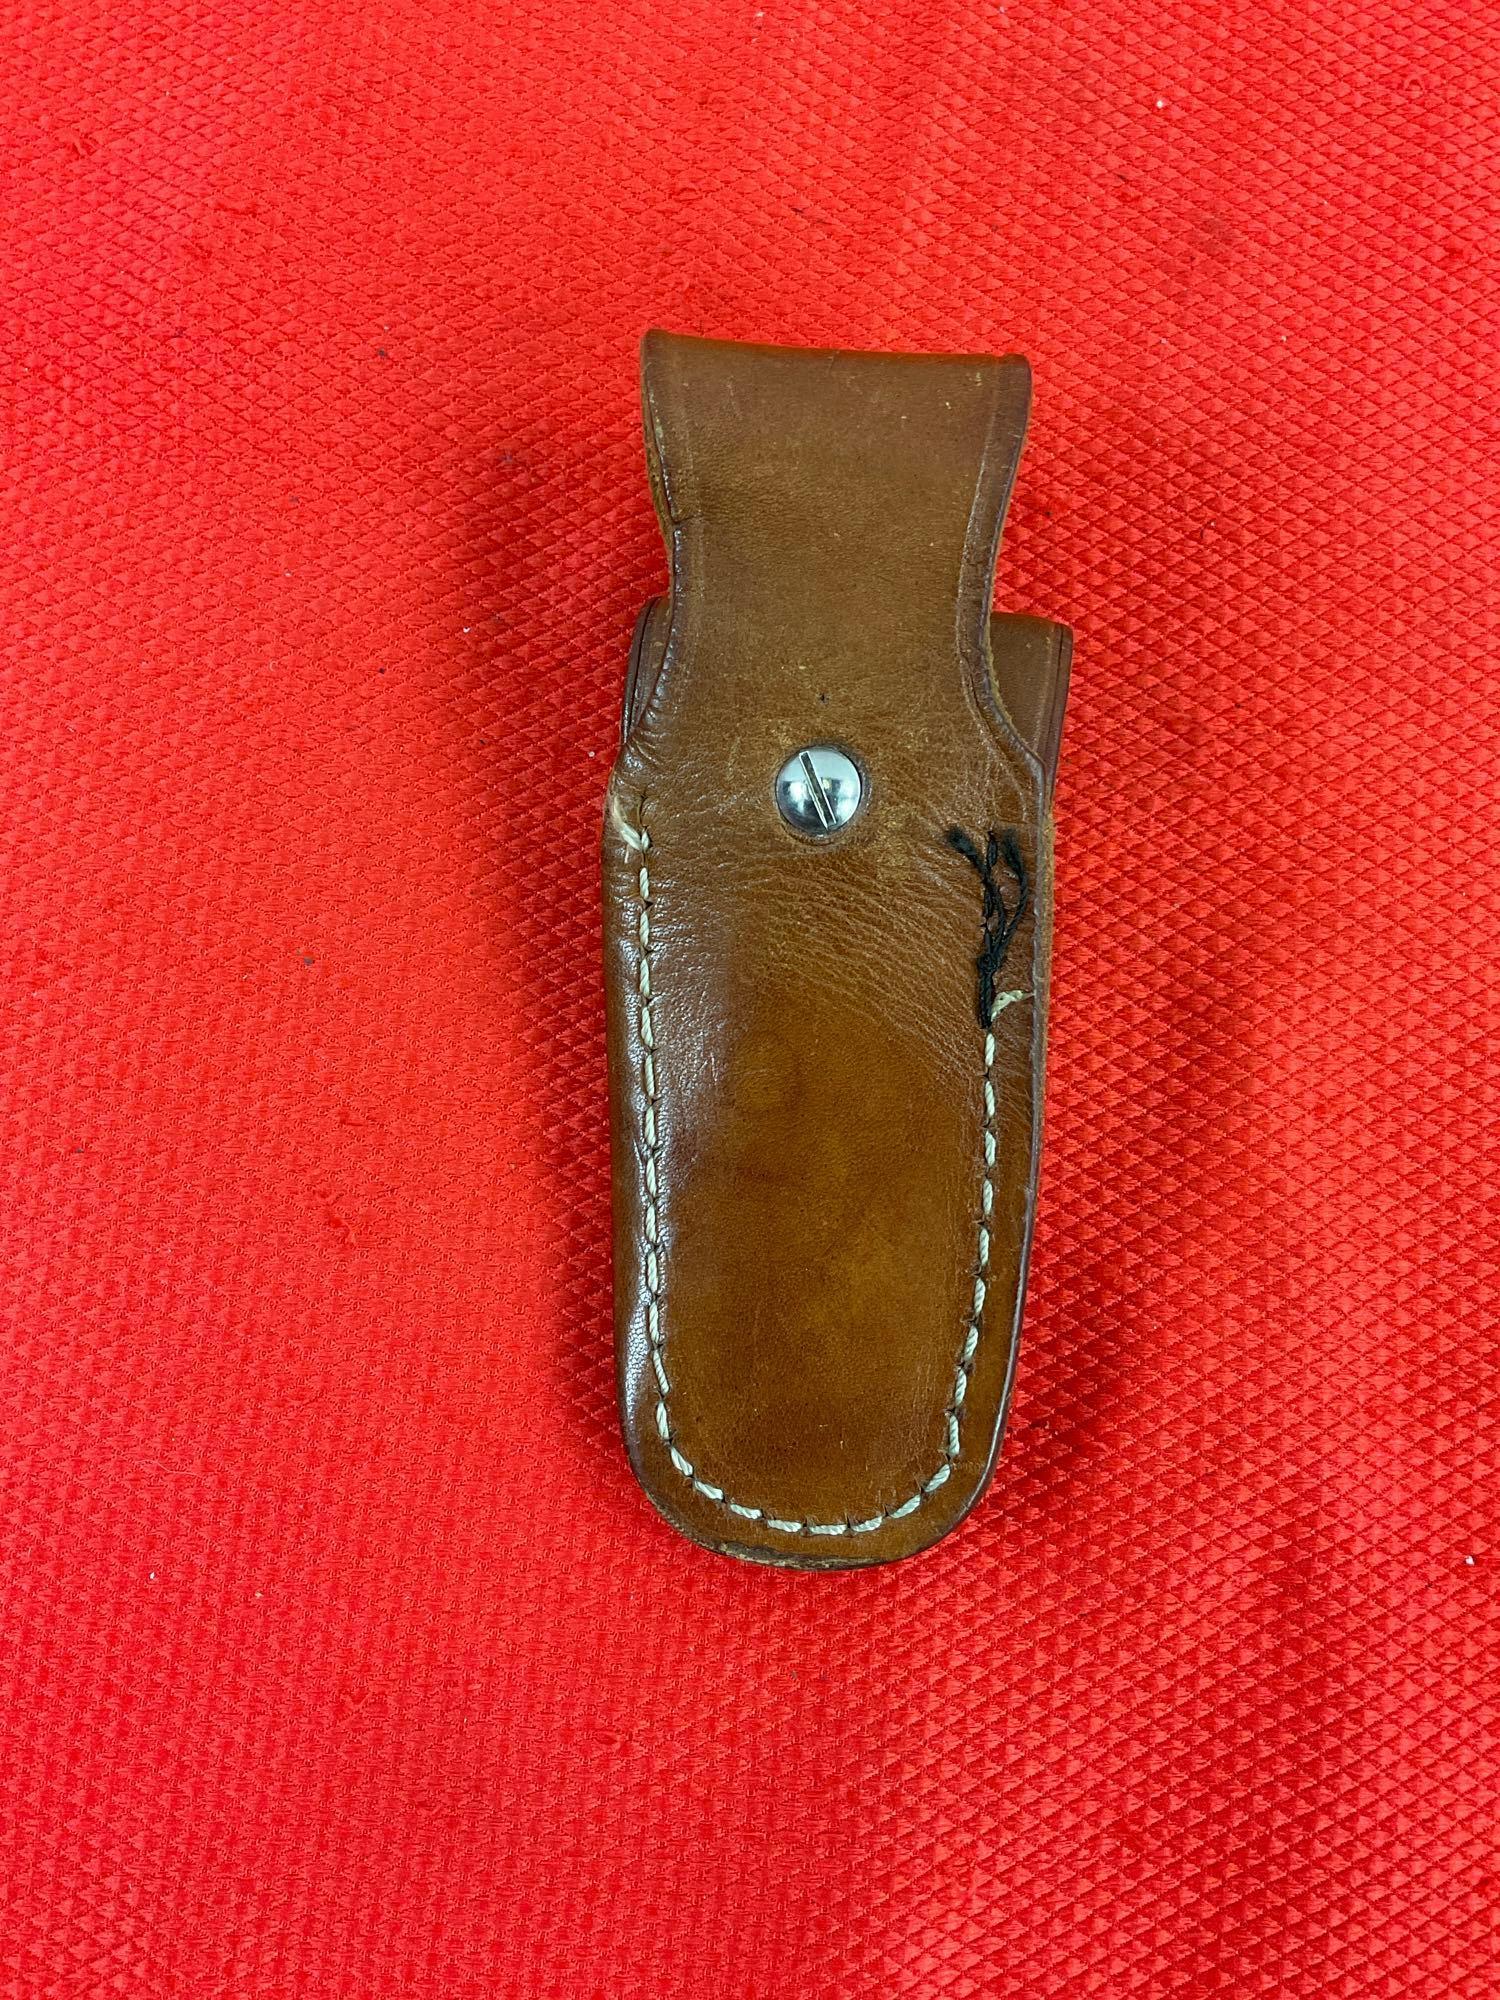 Vintage Western 3" Steel Folding Blade Pocket Knife E-534E w/ Etched Ram & Original Sheath. See